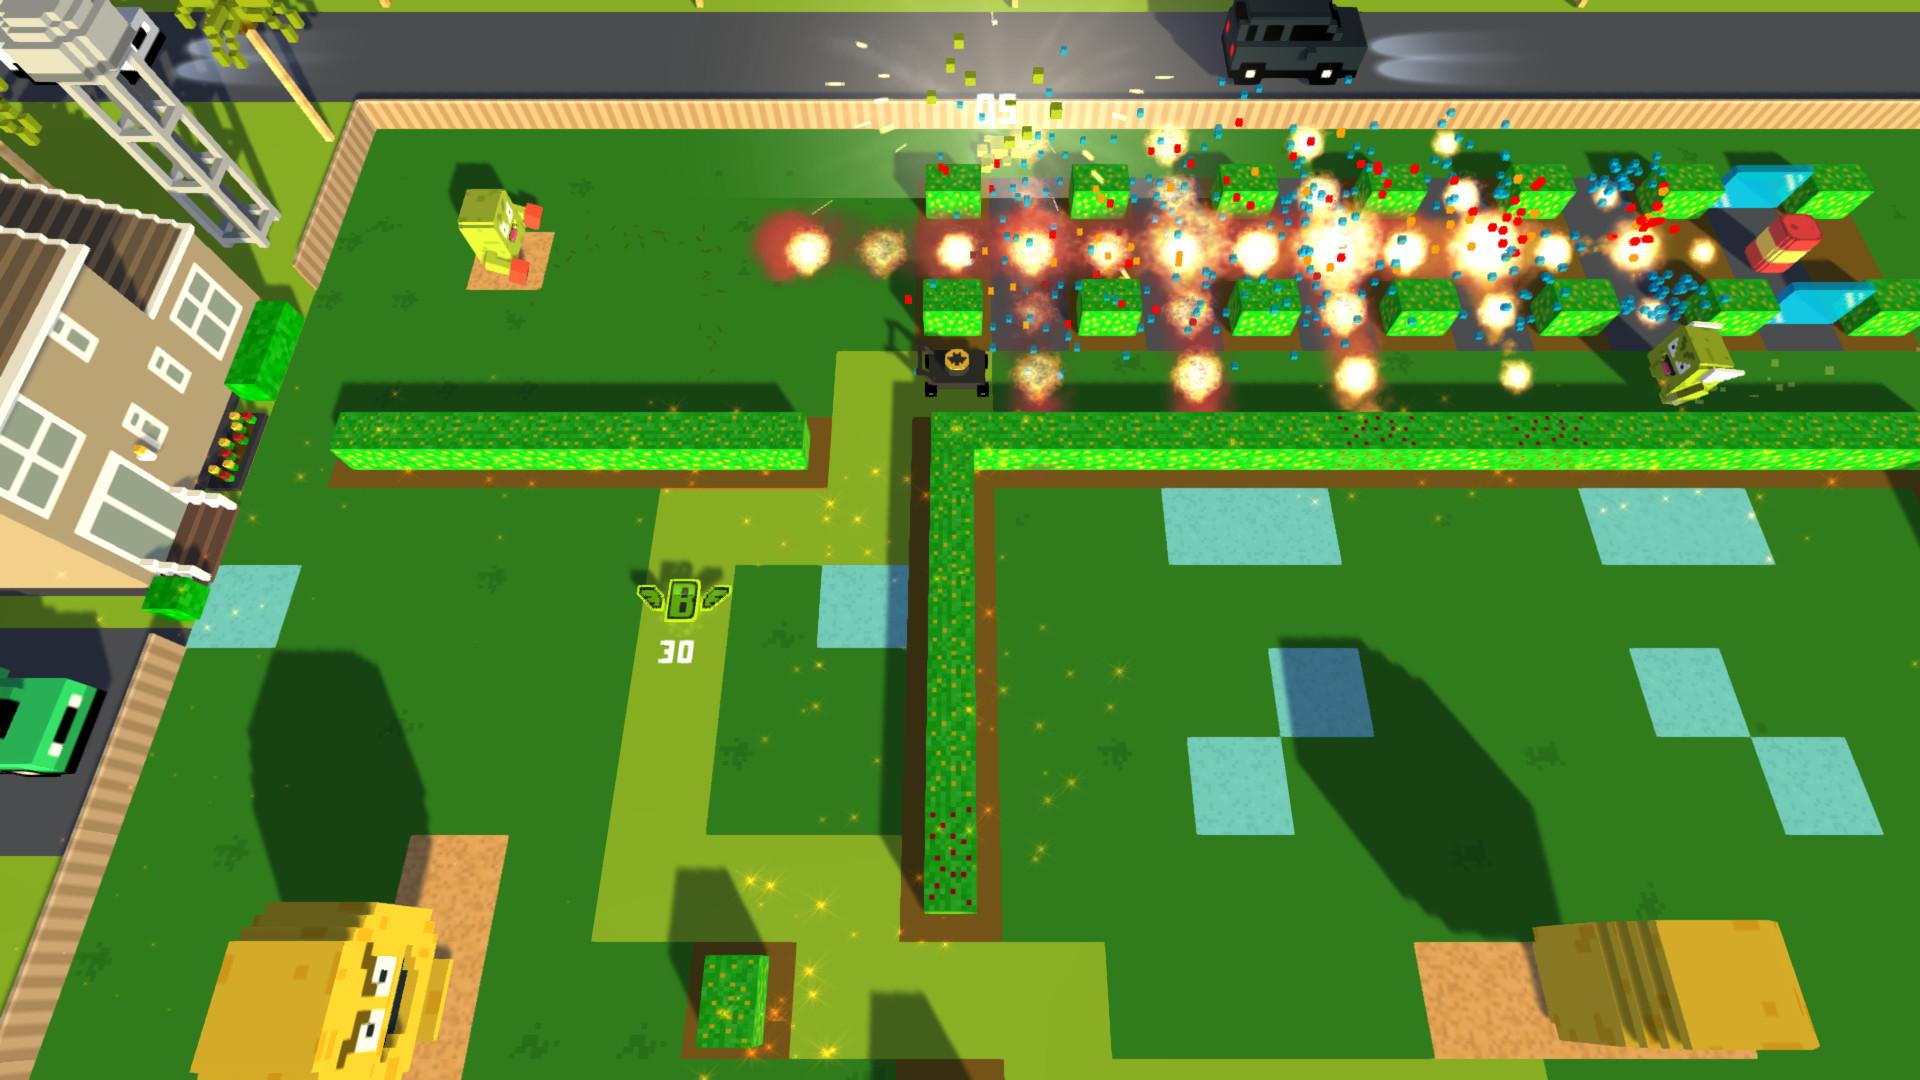 Screenshot №7 from game Grass Cutter - Mutated Lawns